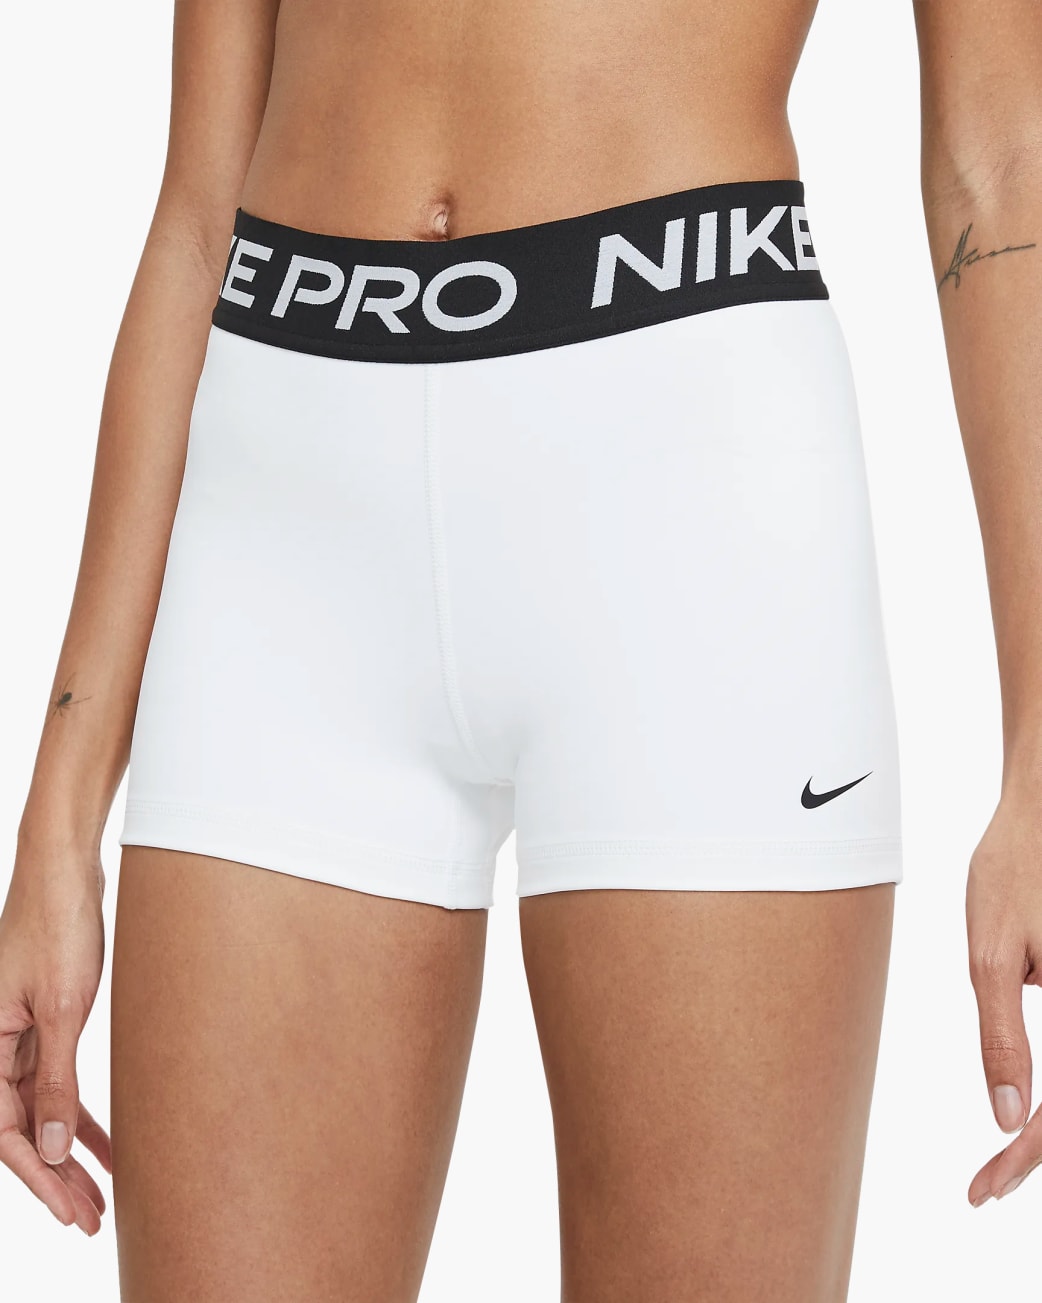 Nike Women's 3 Pro Training Shorts - White / Black